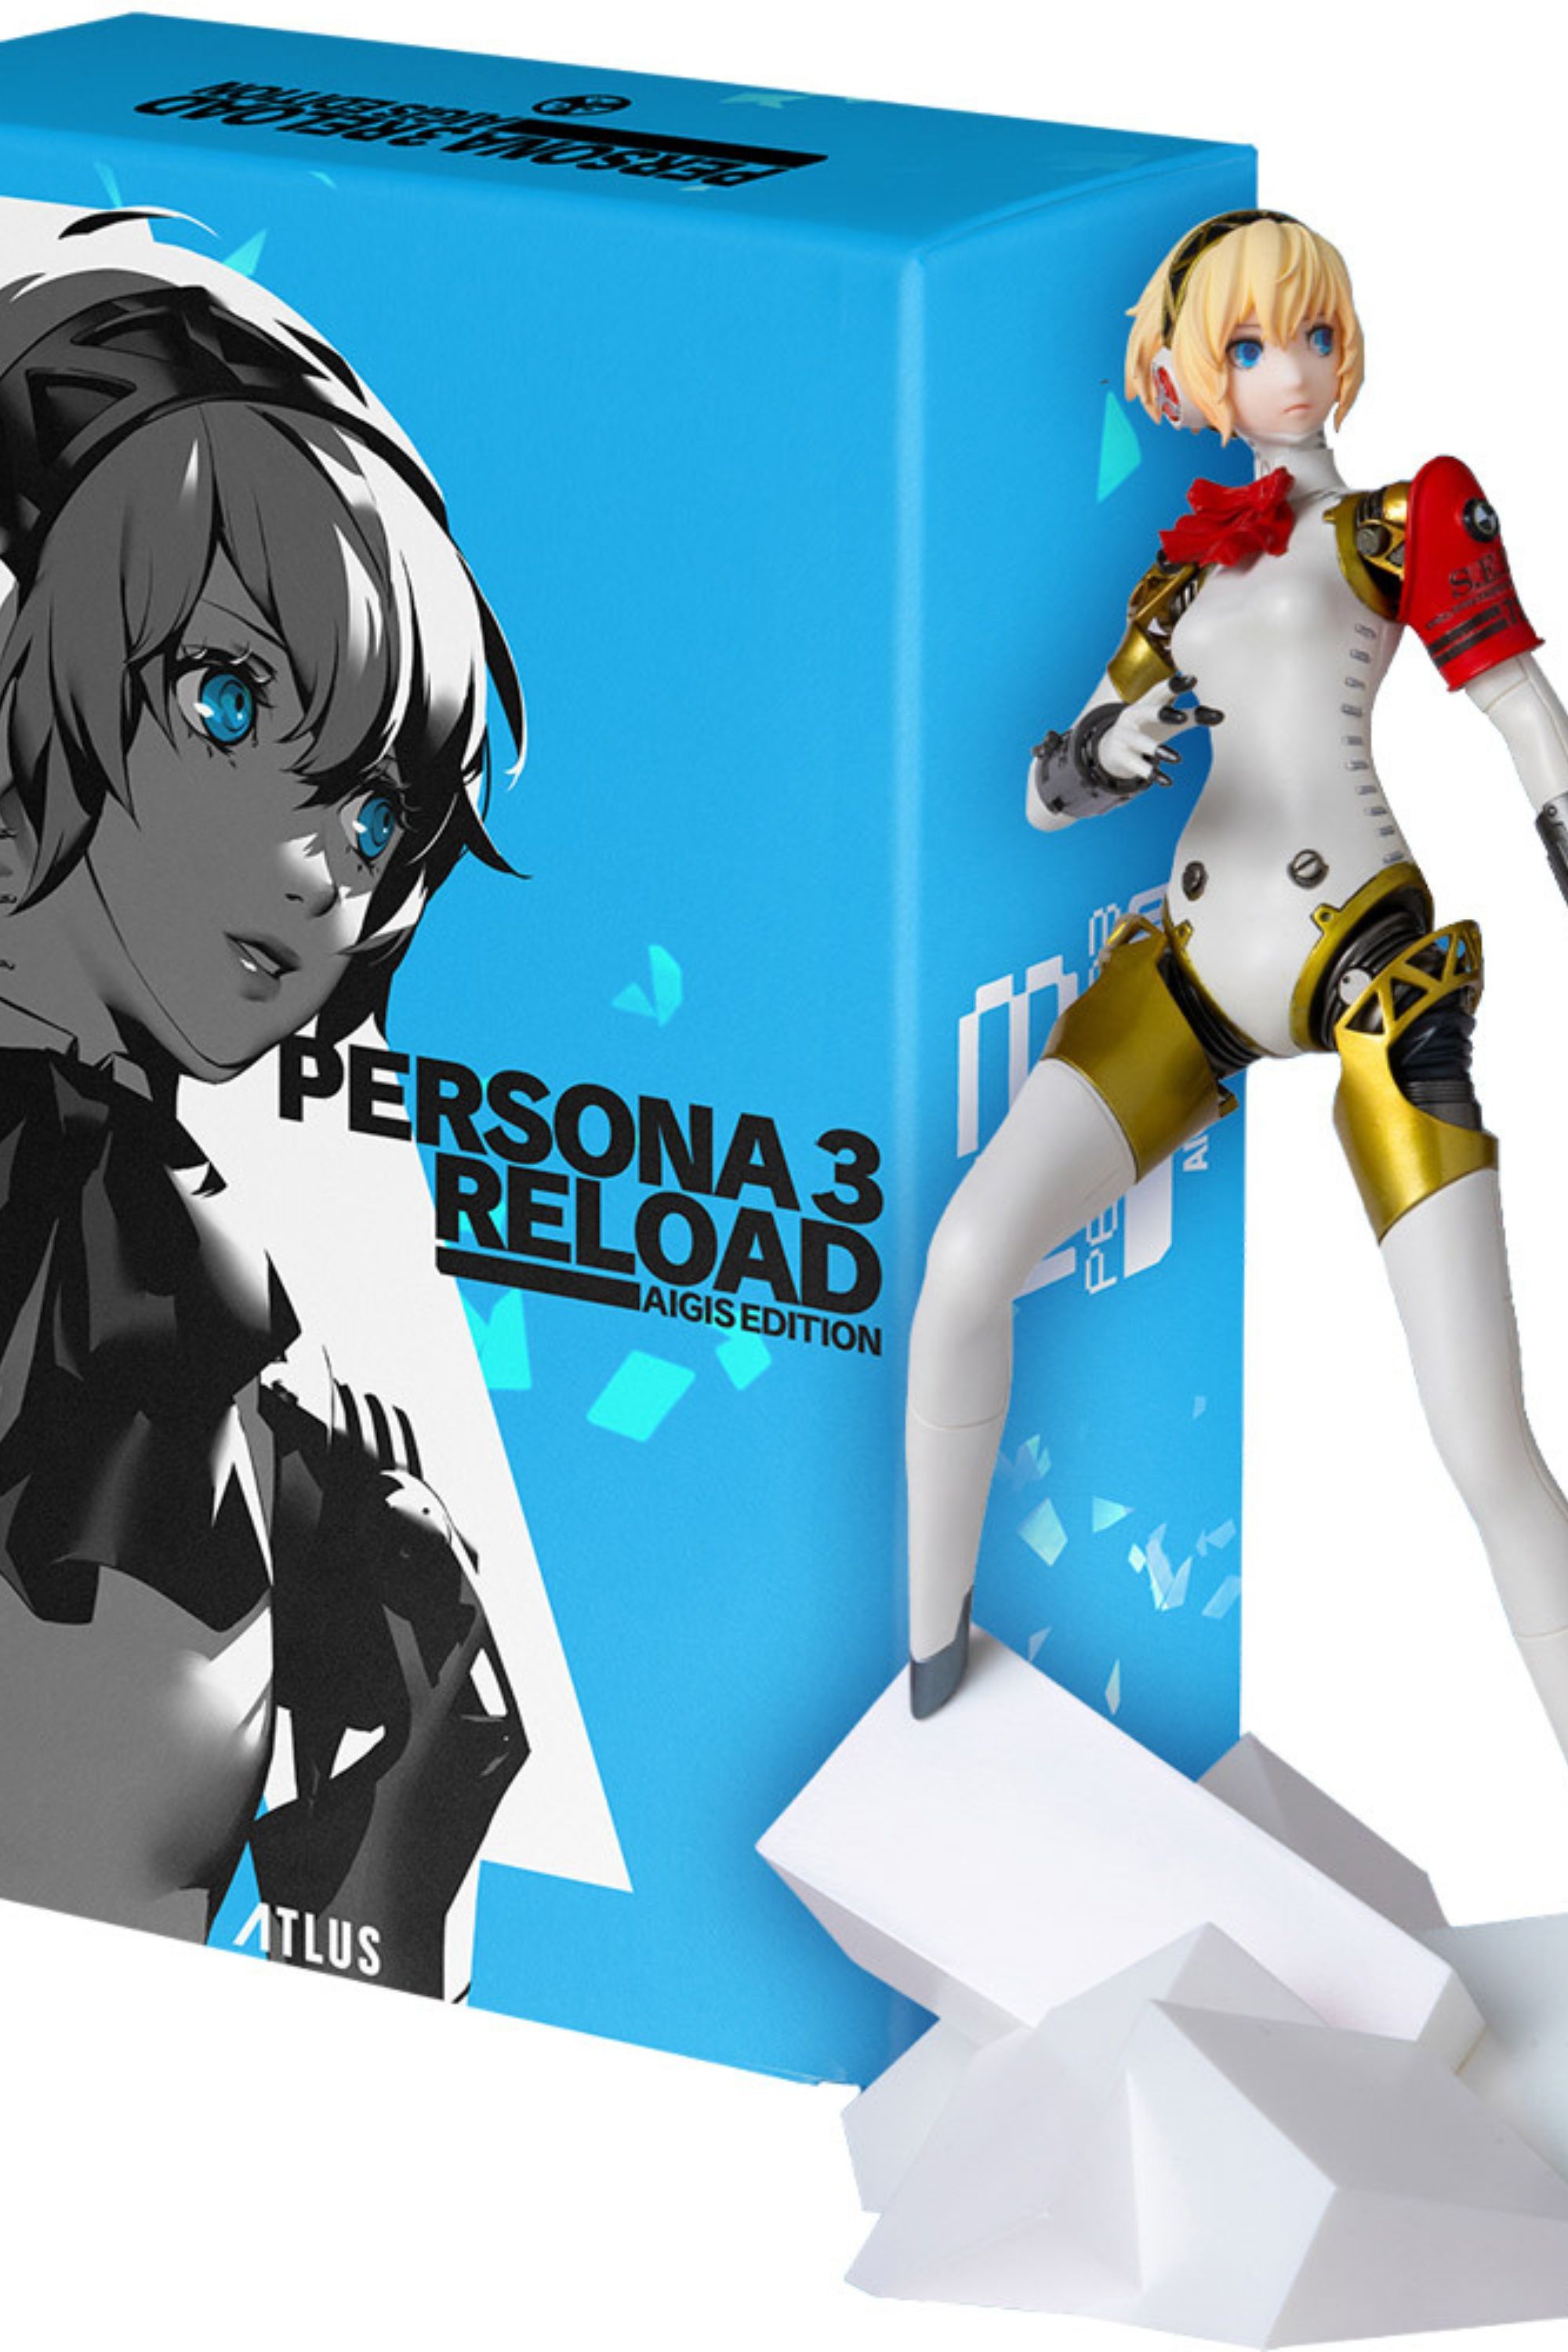 Persona 3 Reload (Aigis & Remix Collectors Edition) BGM, Outfits, Person  : r/atlus